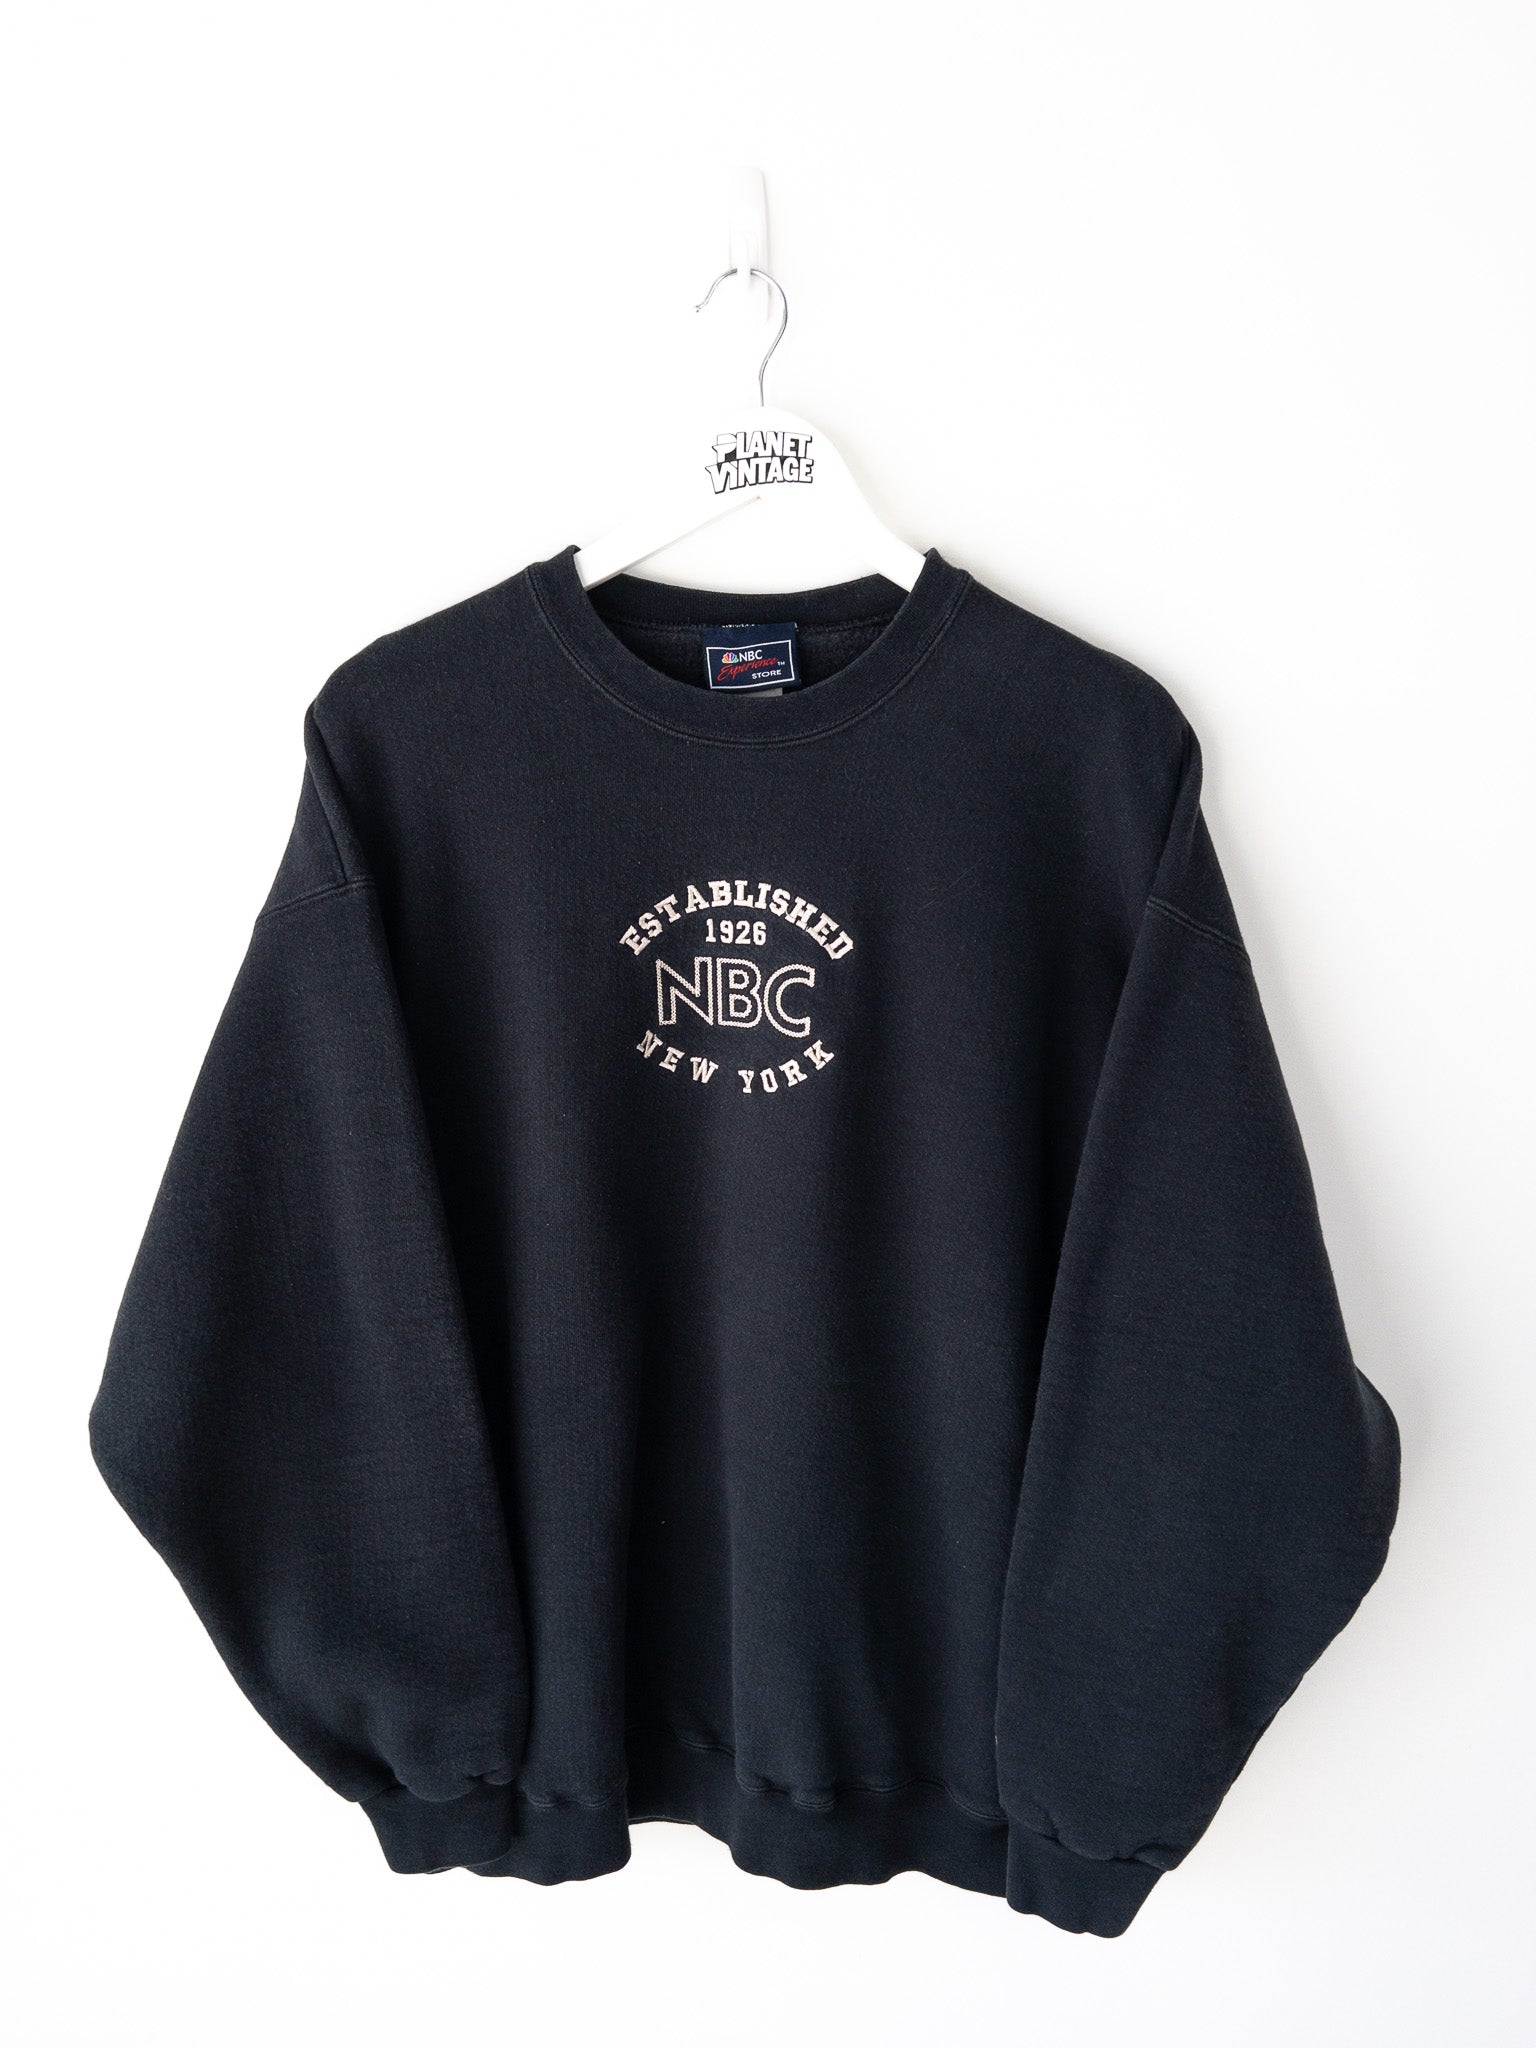 Vintage NBC New York Sweatshirt (XL)